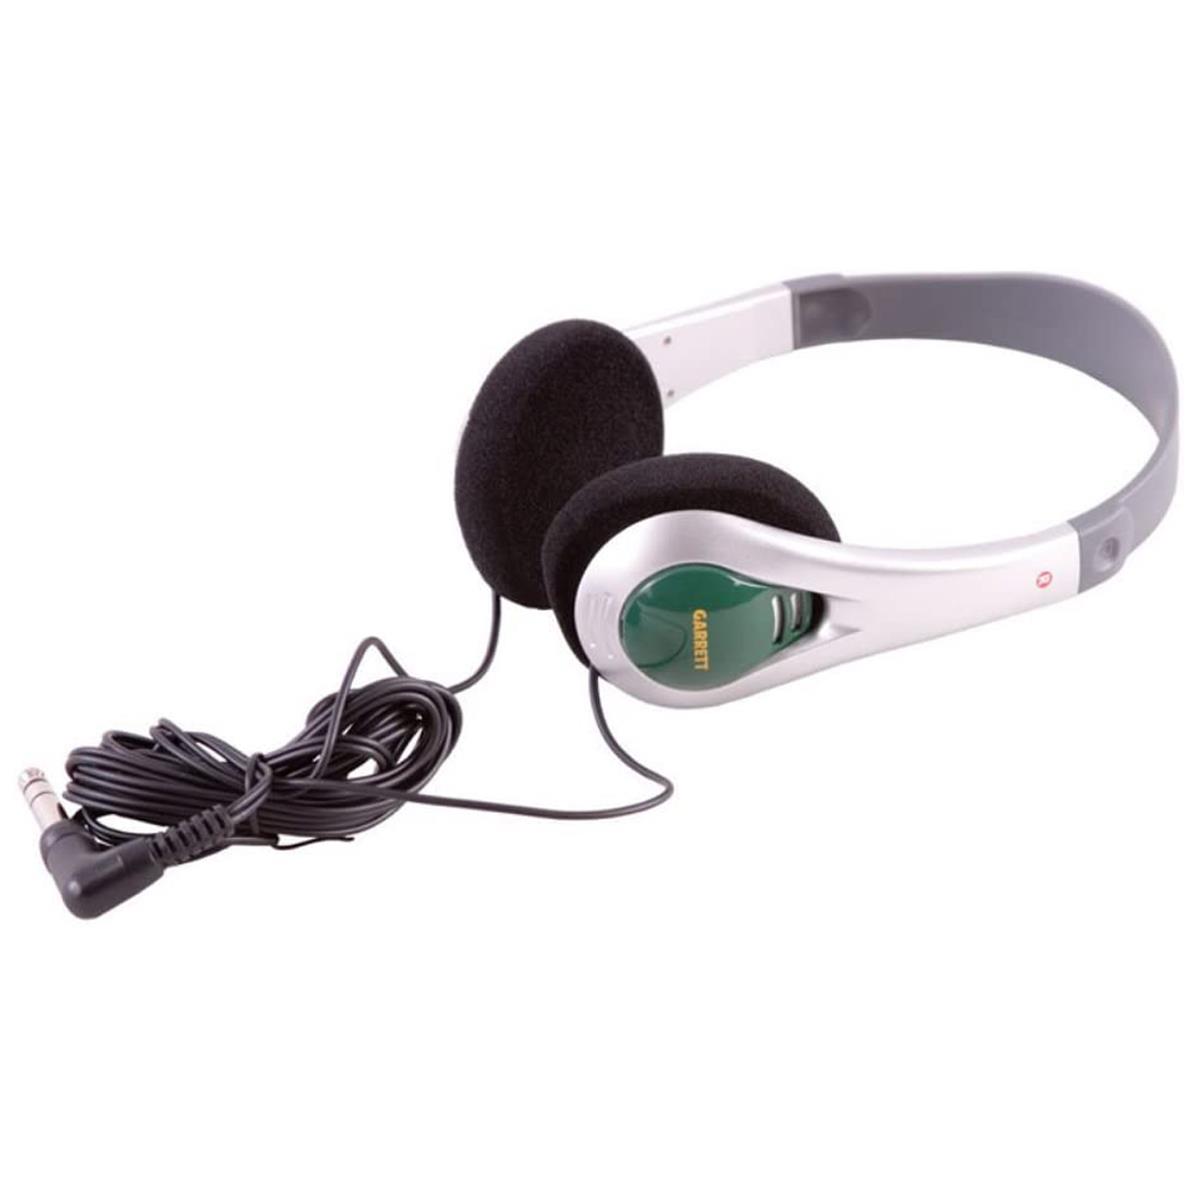 Image of Garrett Treasuresound Headphones